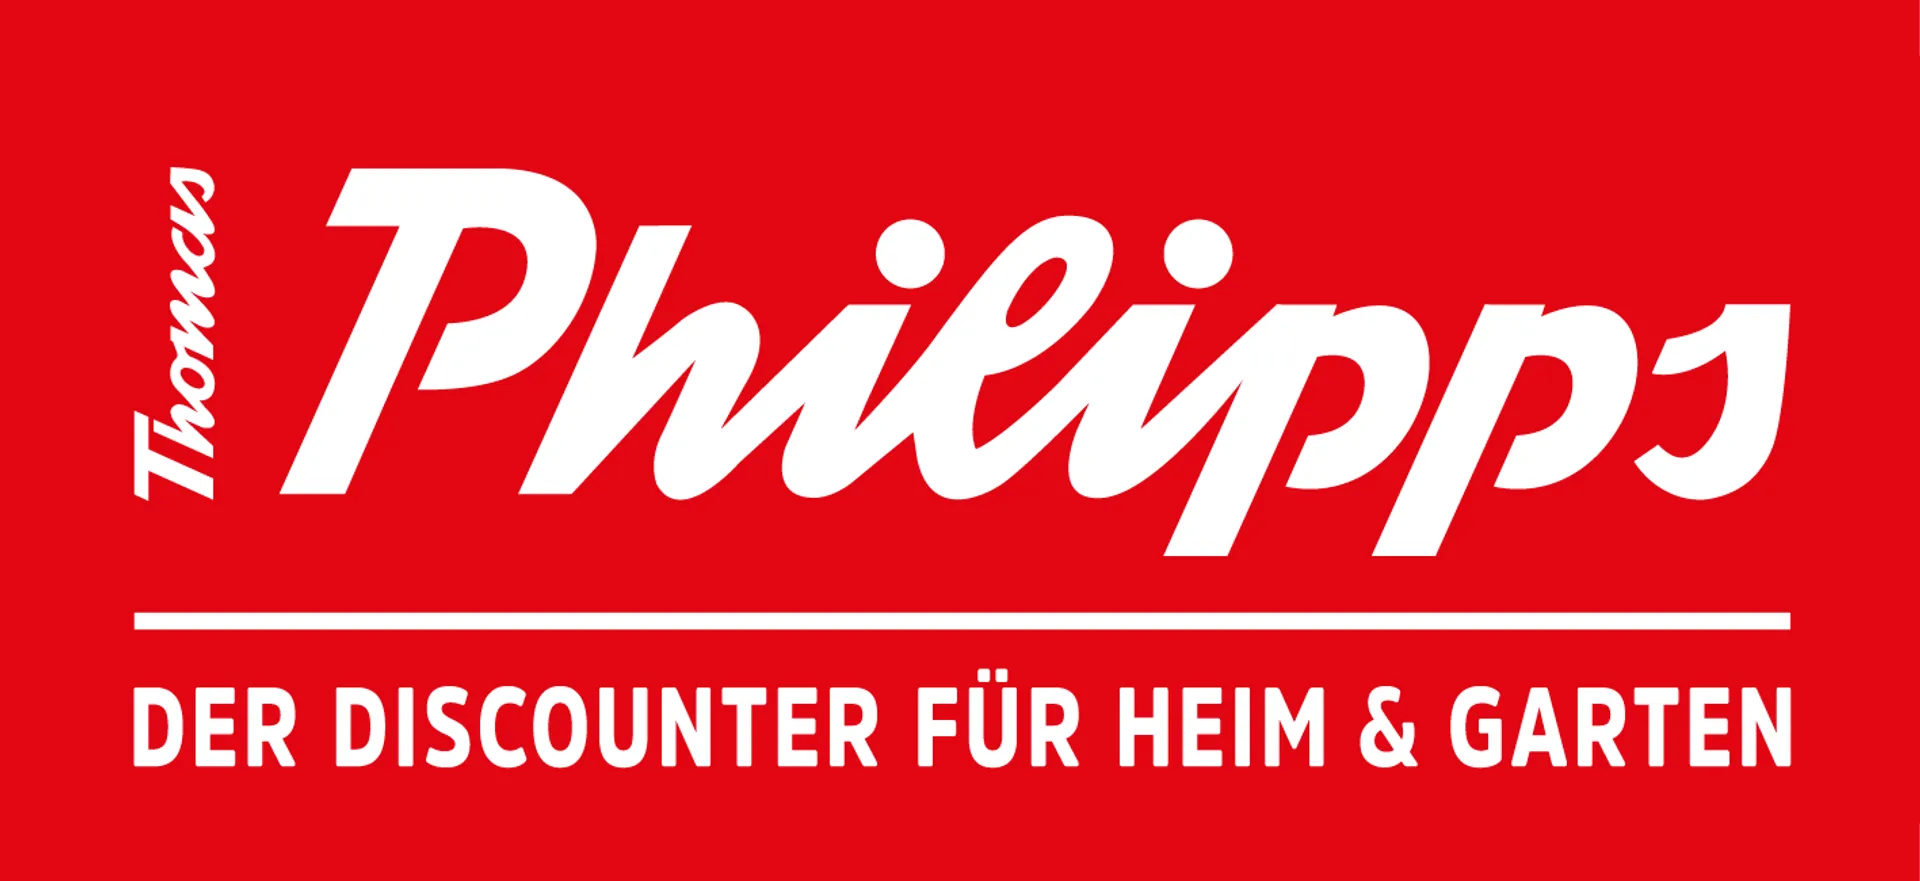 THOMAS PHILIPPS logo die aktuell Flugblatt